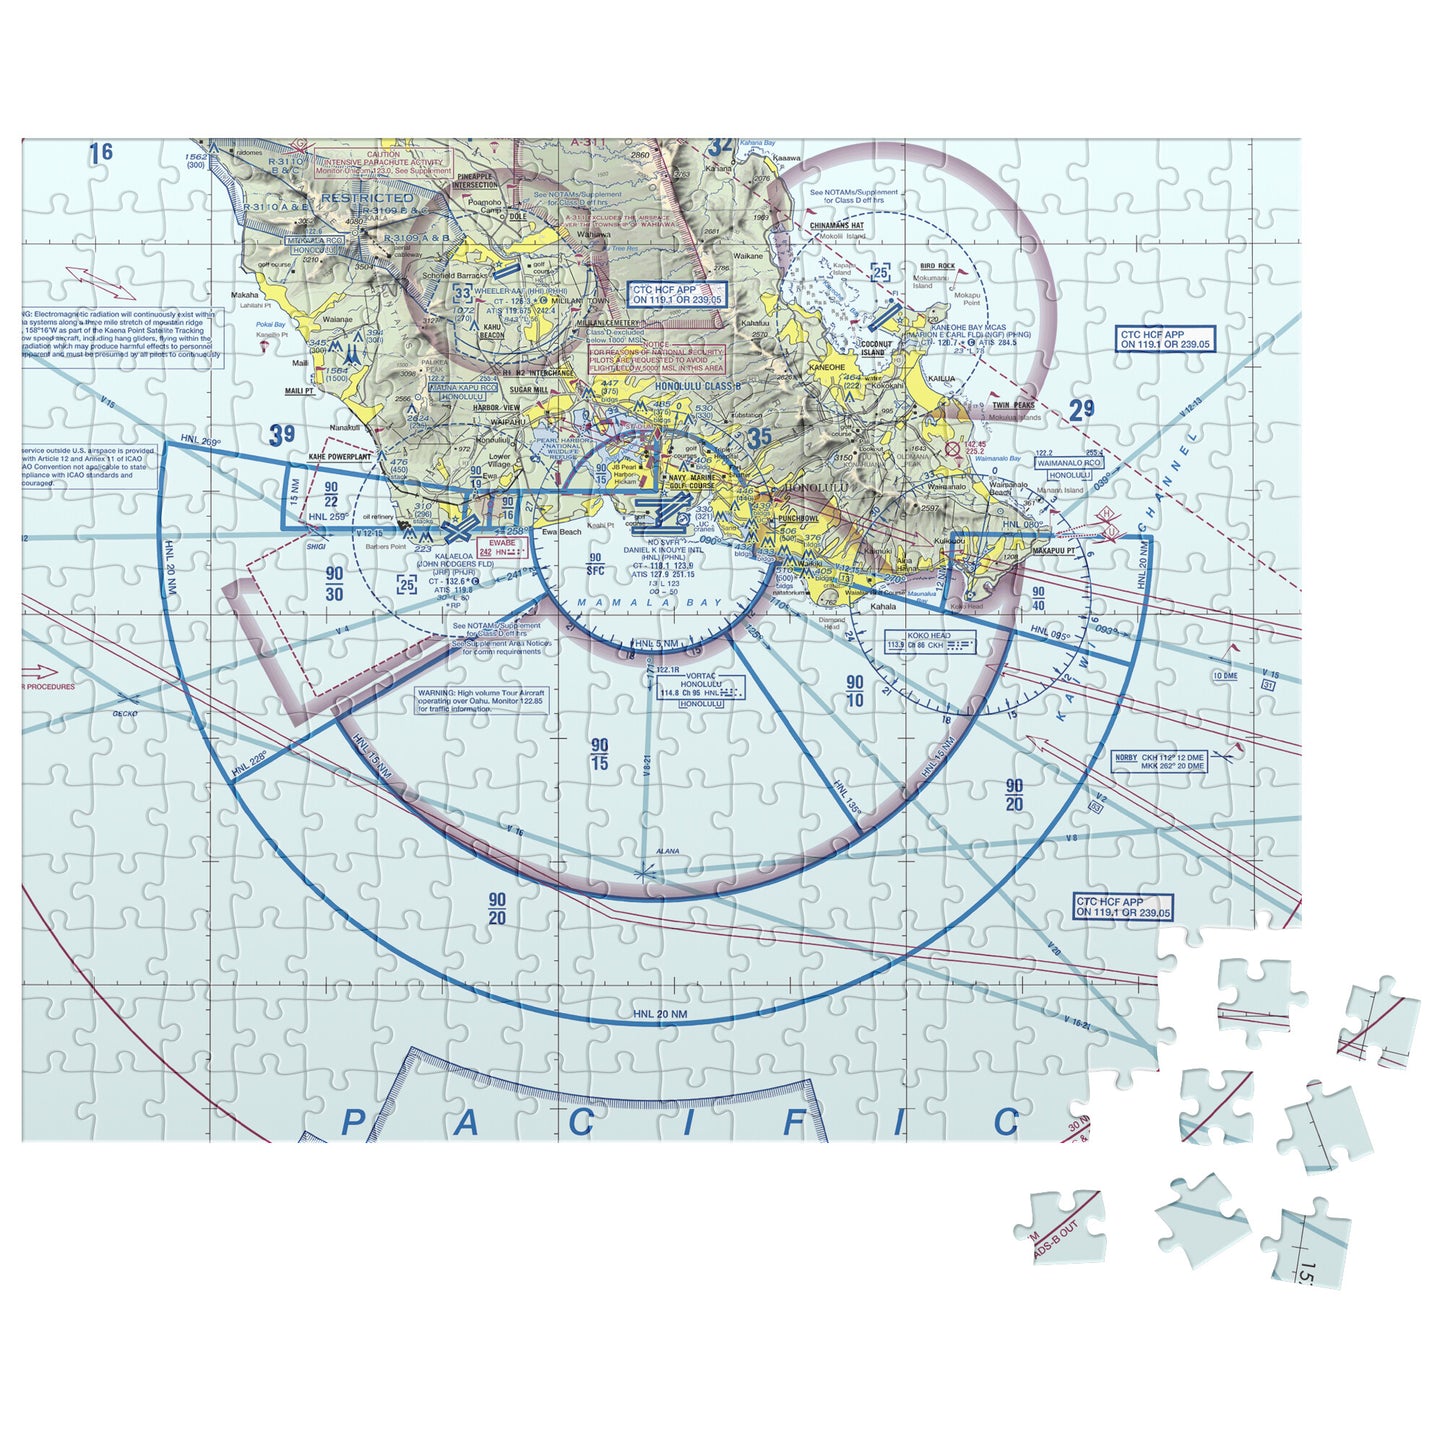 Honolulu Sectional Chart jigsaw puzzle